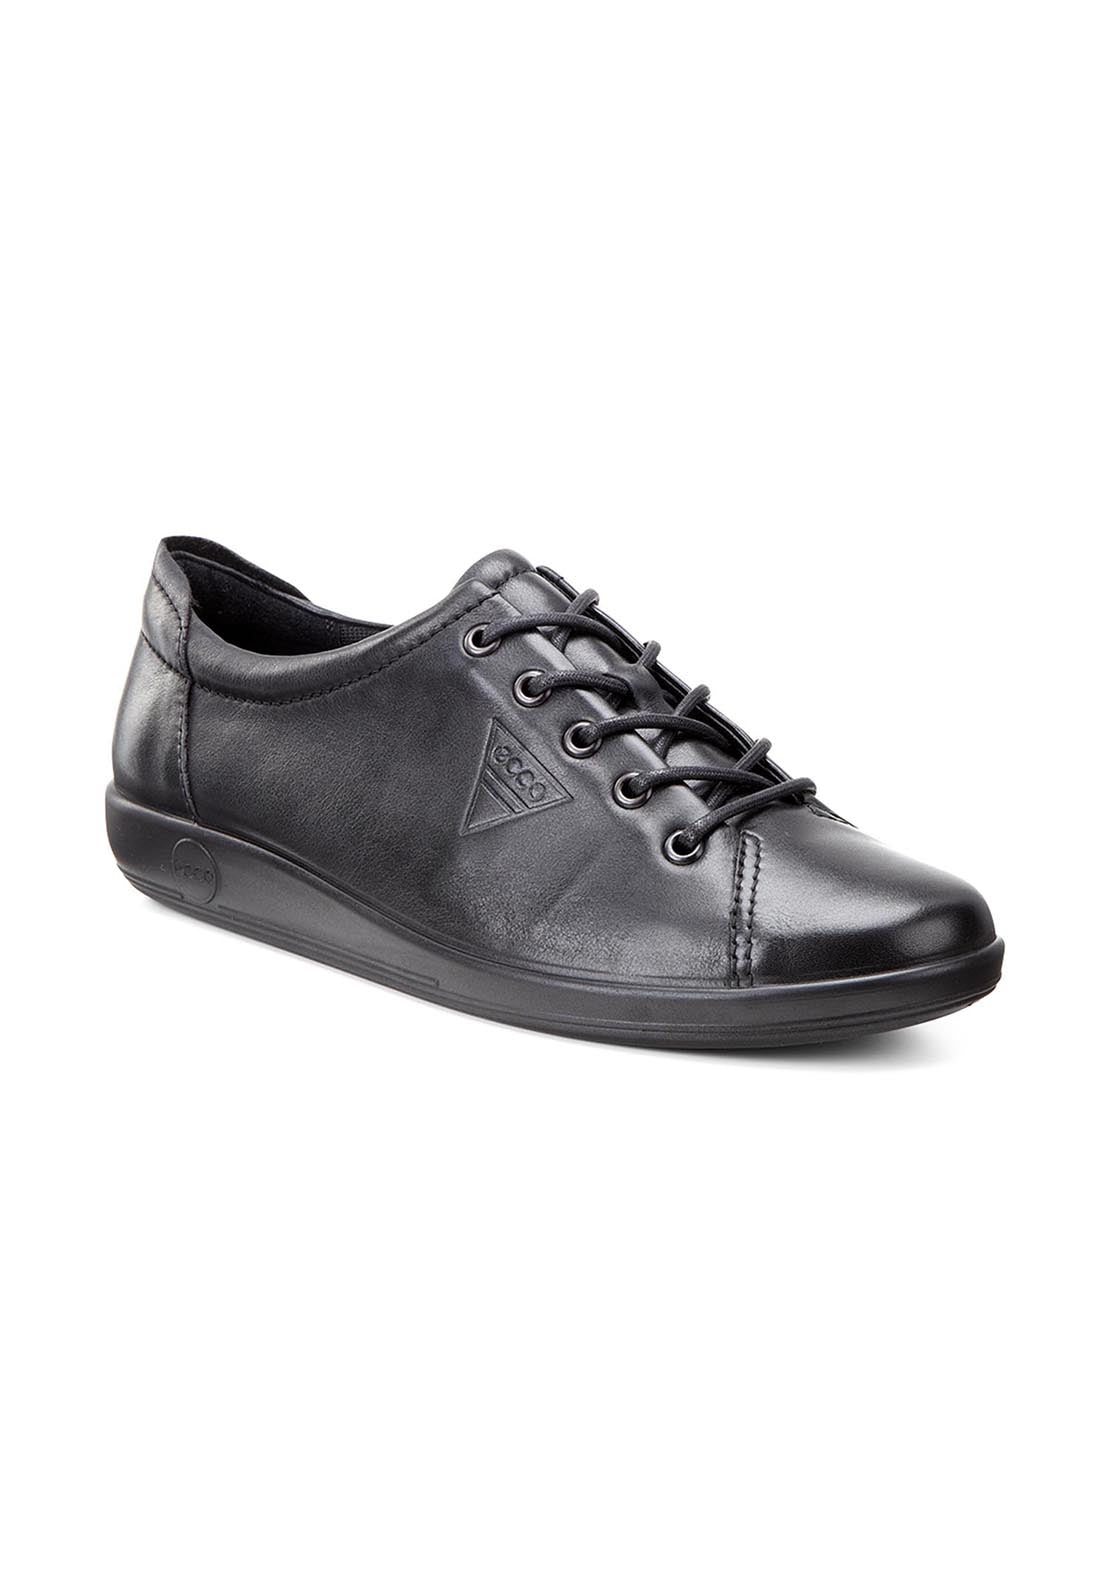 Ecco Soft 2 Ladies Shoe - Black 1 Shaws Department Stores